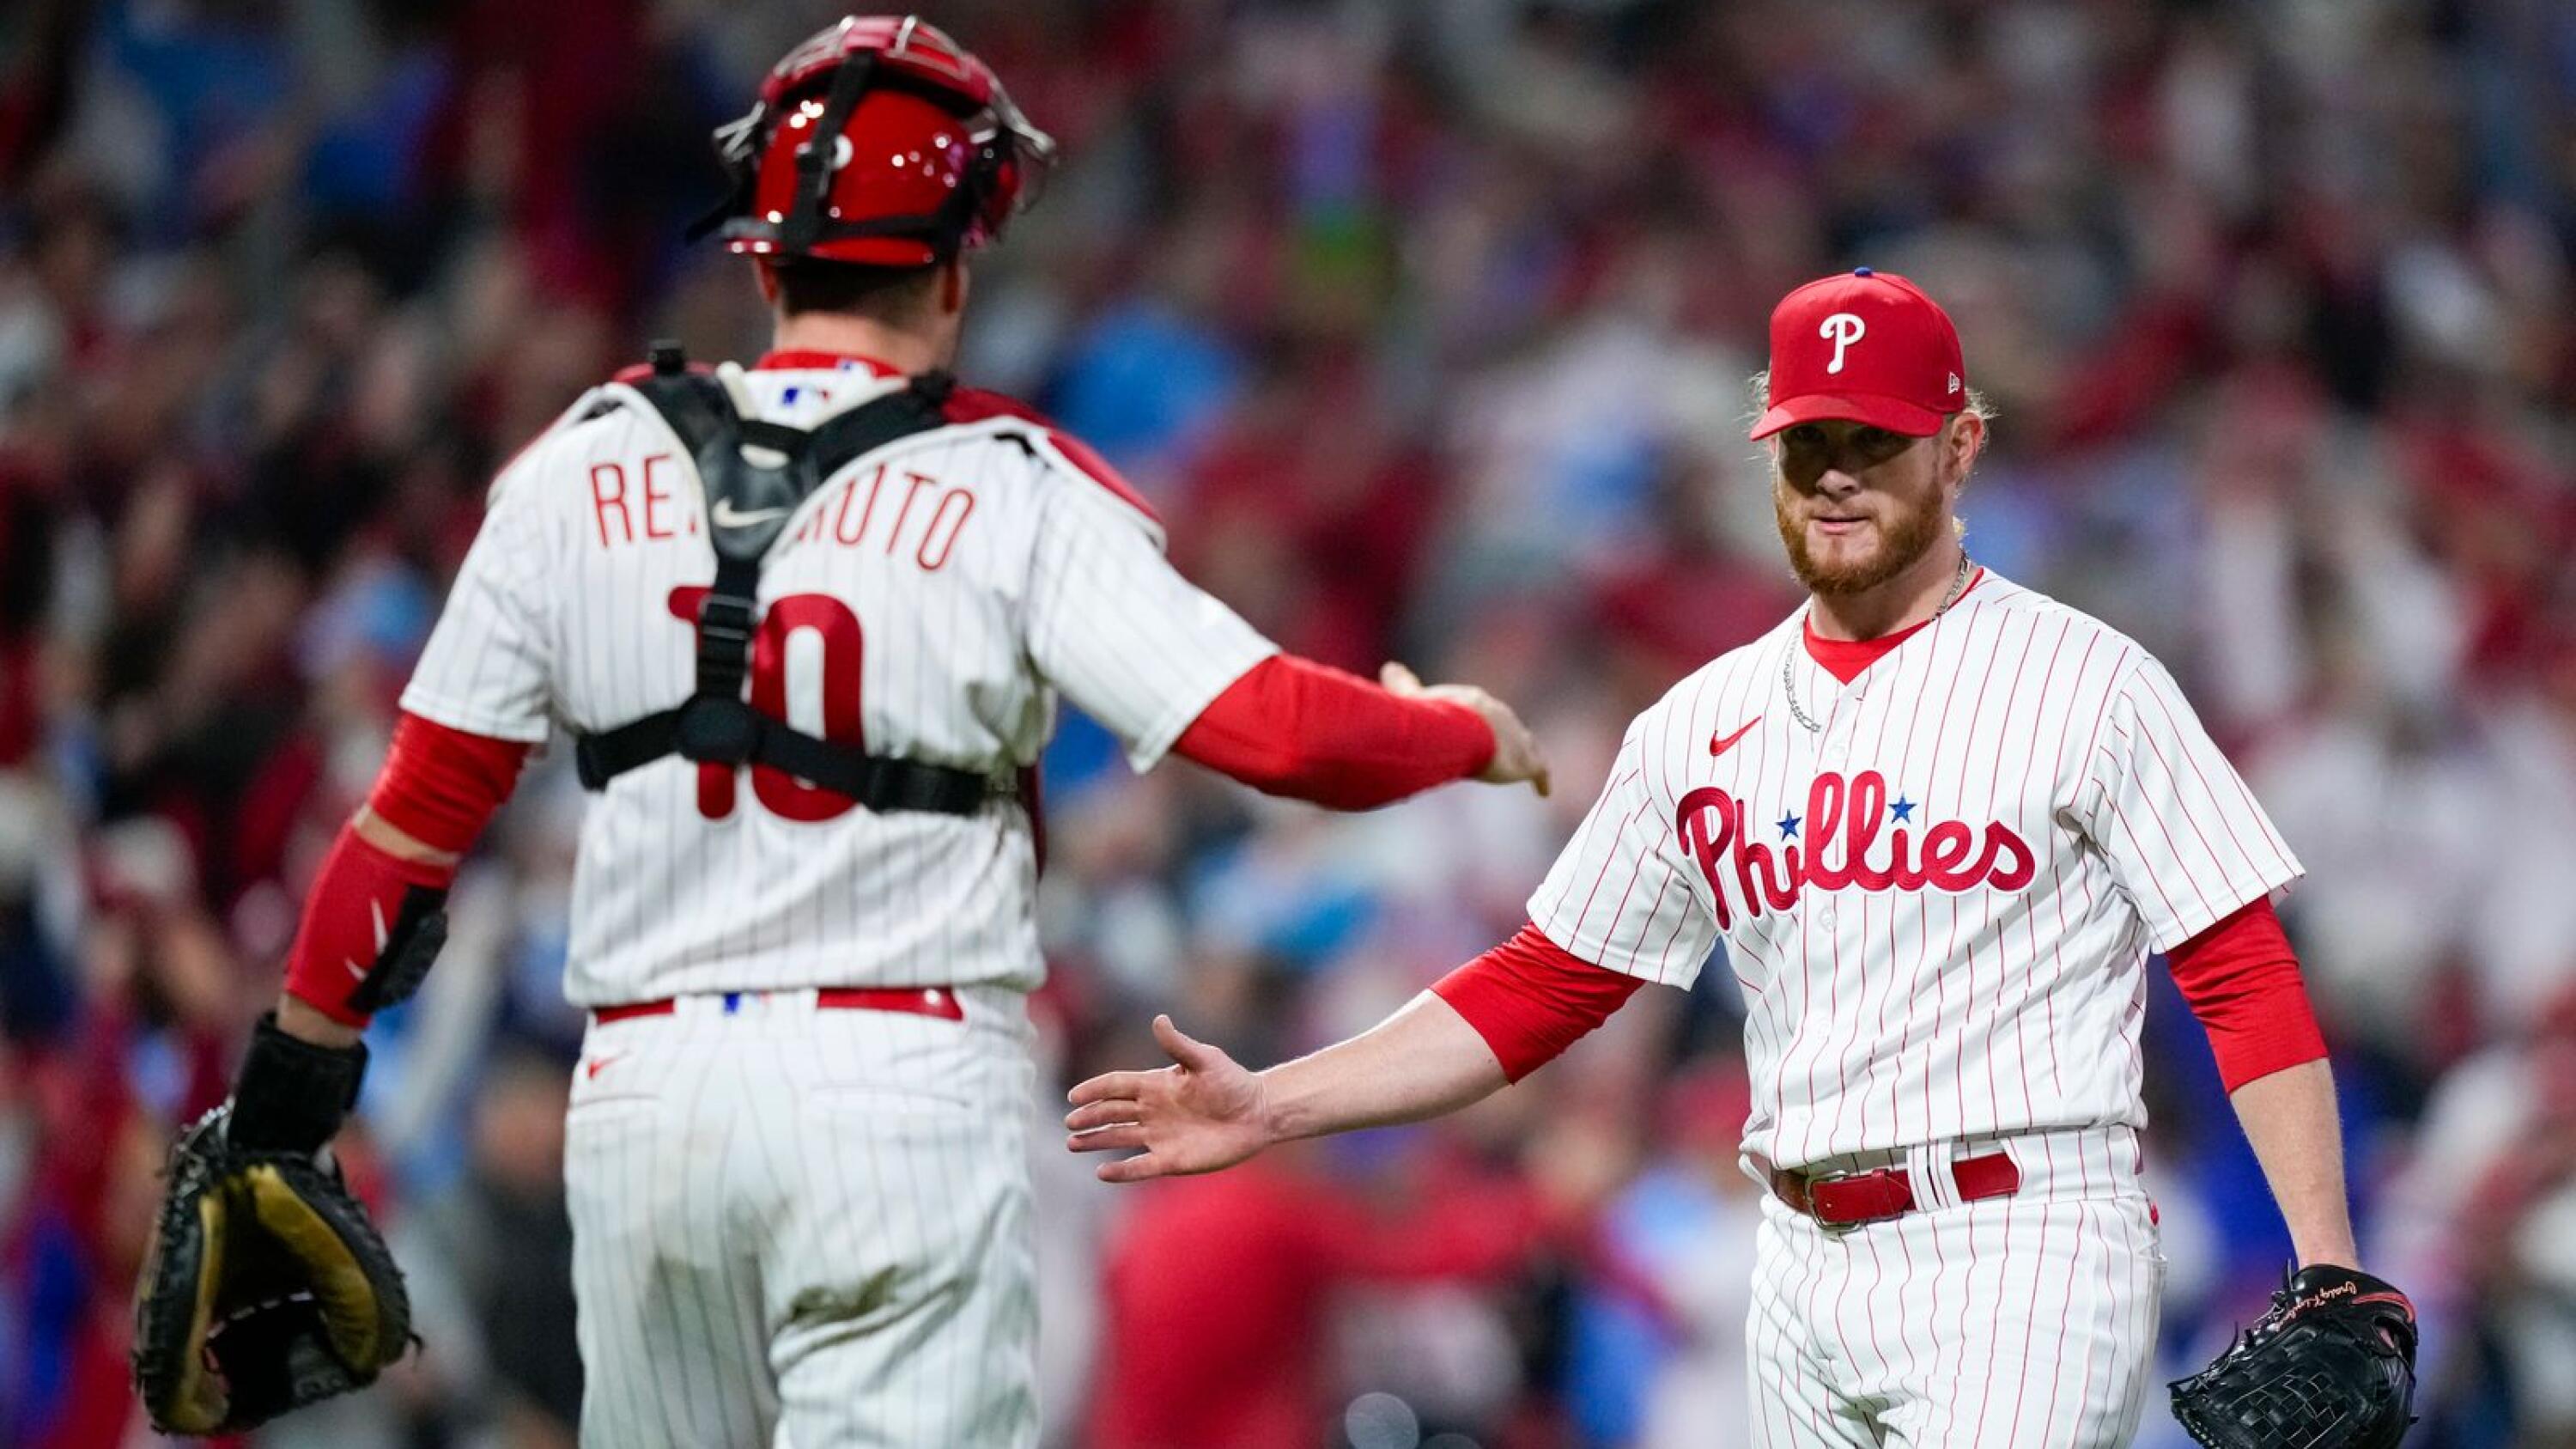 VIDEO: Bryce Harper hits game-winning grand slam for Phillies